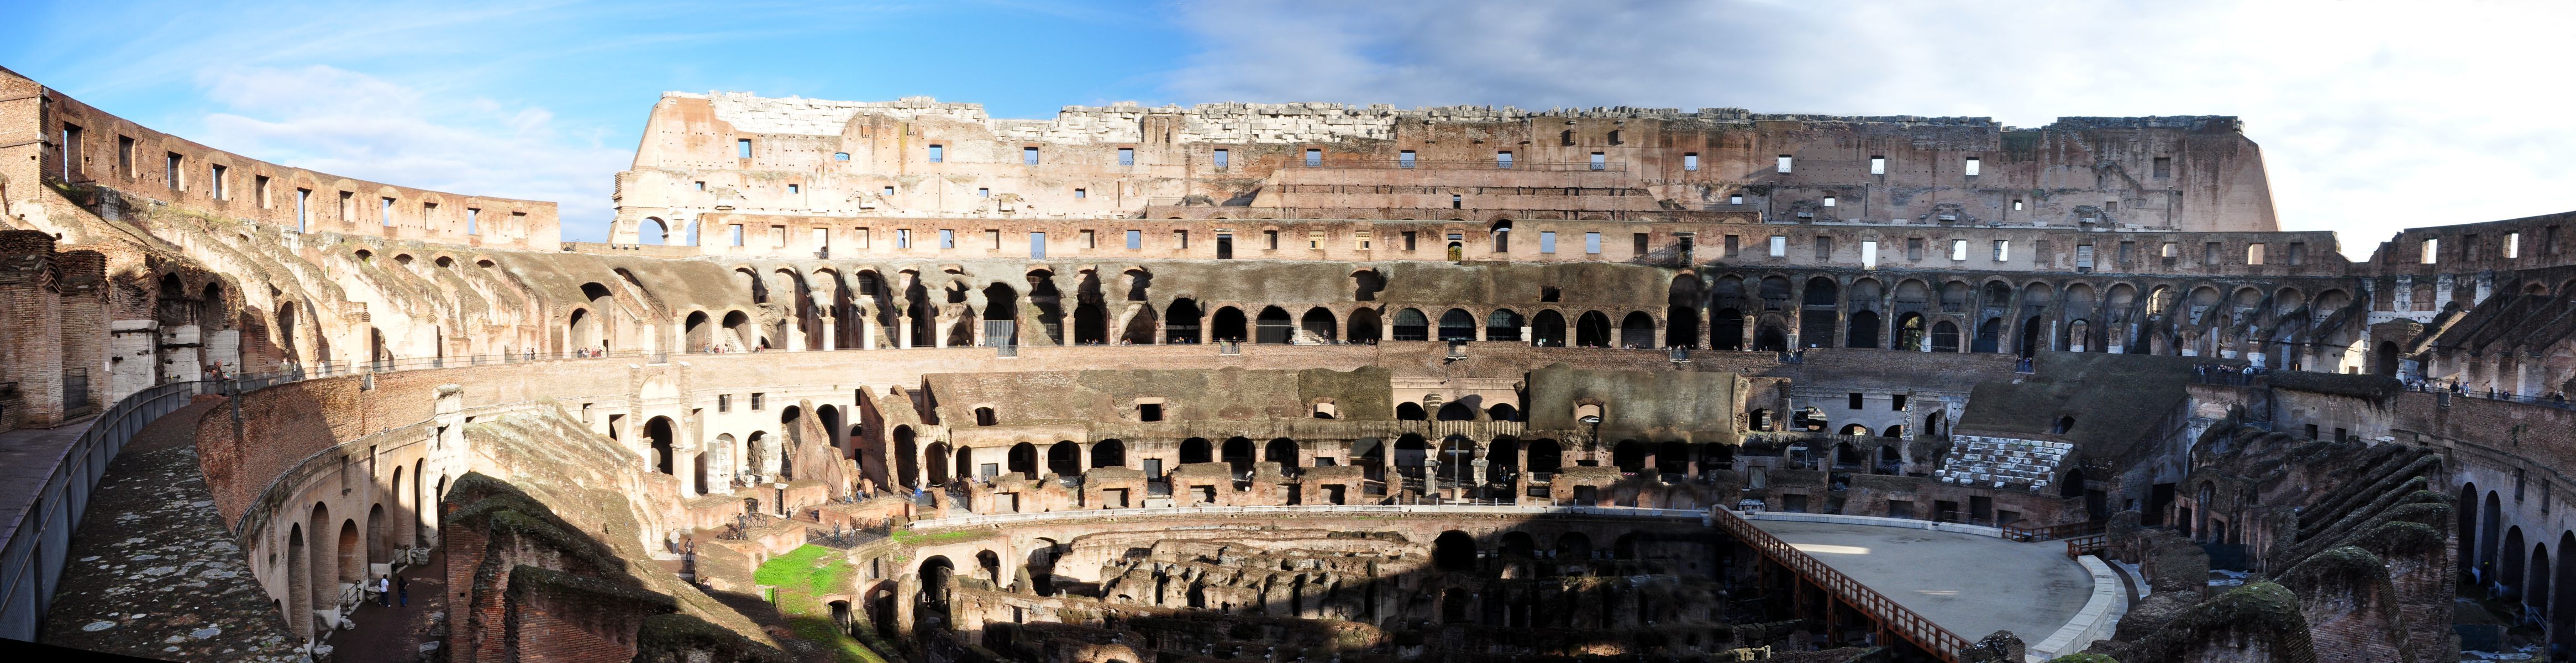 The Coliseum - Rome - Italy.jpg